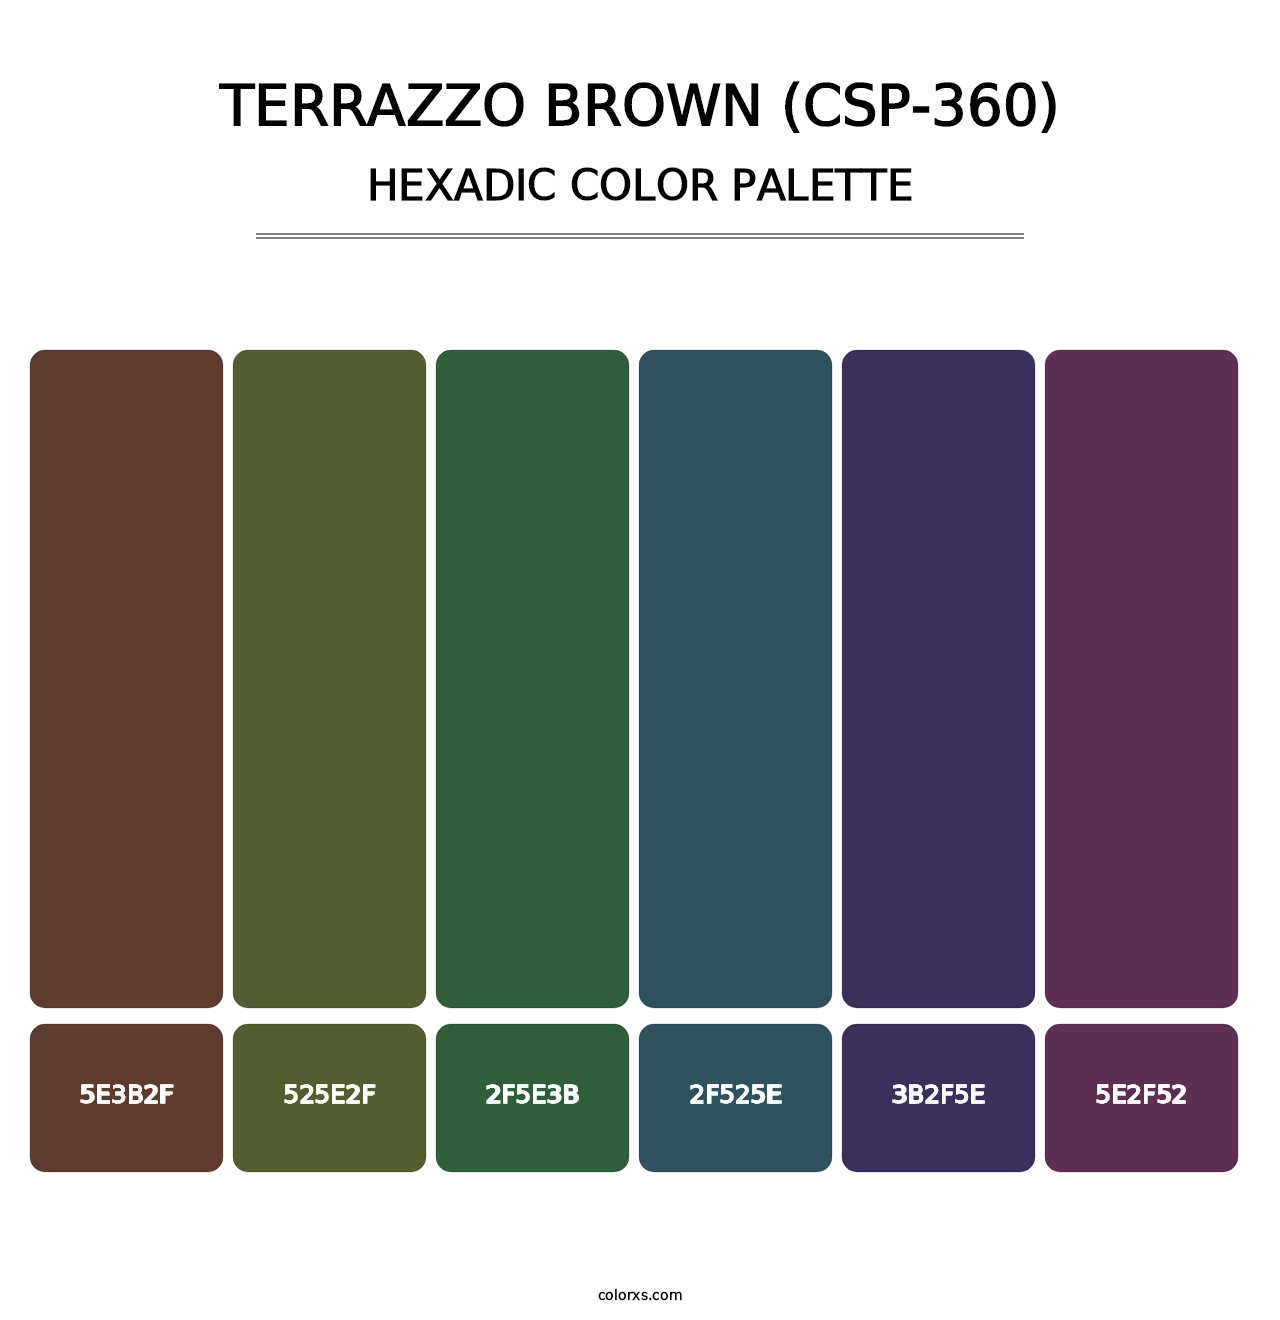 Terrazzo Brown (CSP-360) - Hexadic Color Palette